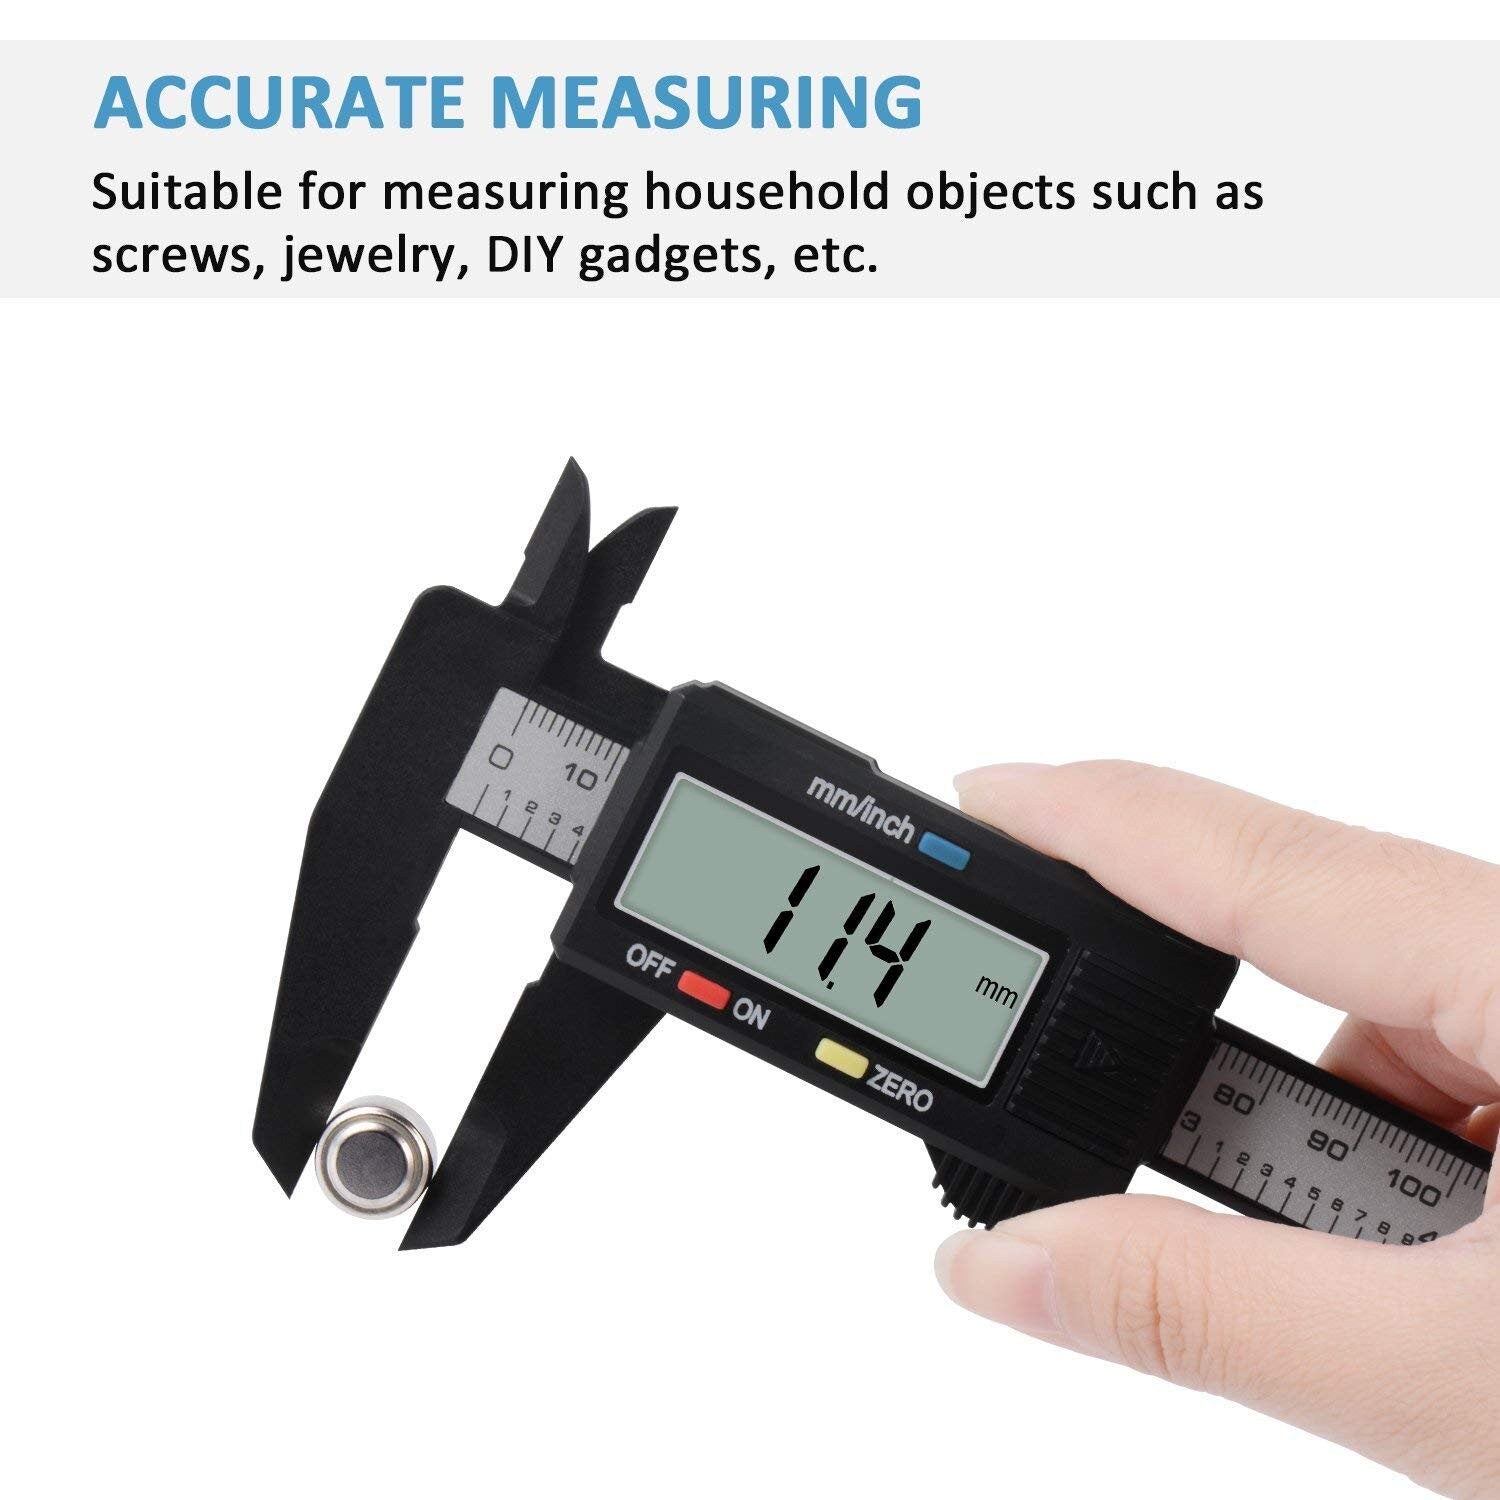 Digital Caliper, Adoric 0-6" Measuring Tool - Electronic Micrometer Caliper Large LCD Screen, Auto-Off Feature, Inch & Millimeter Conversion